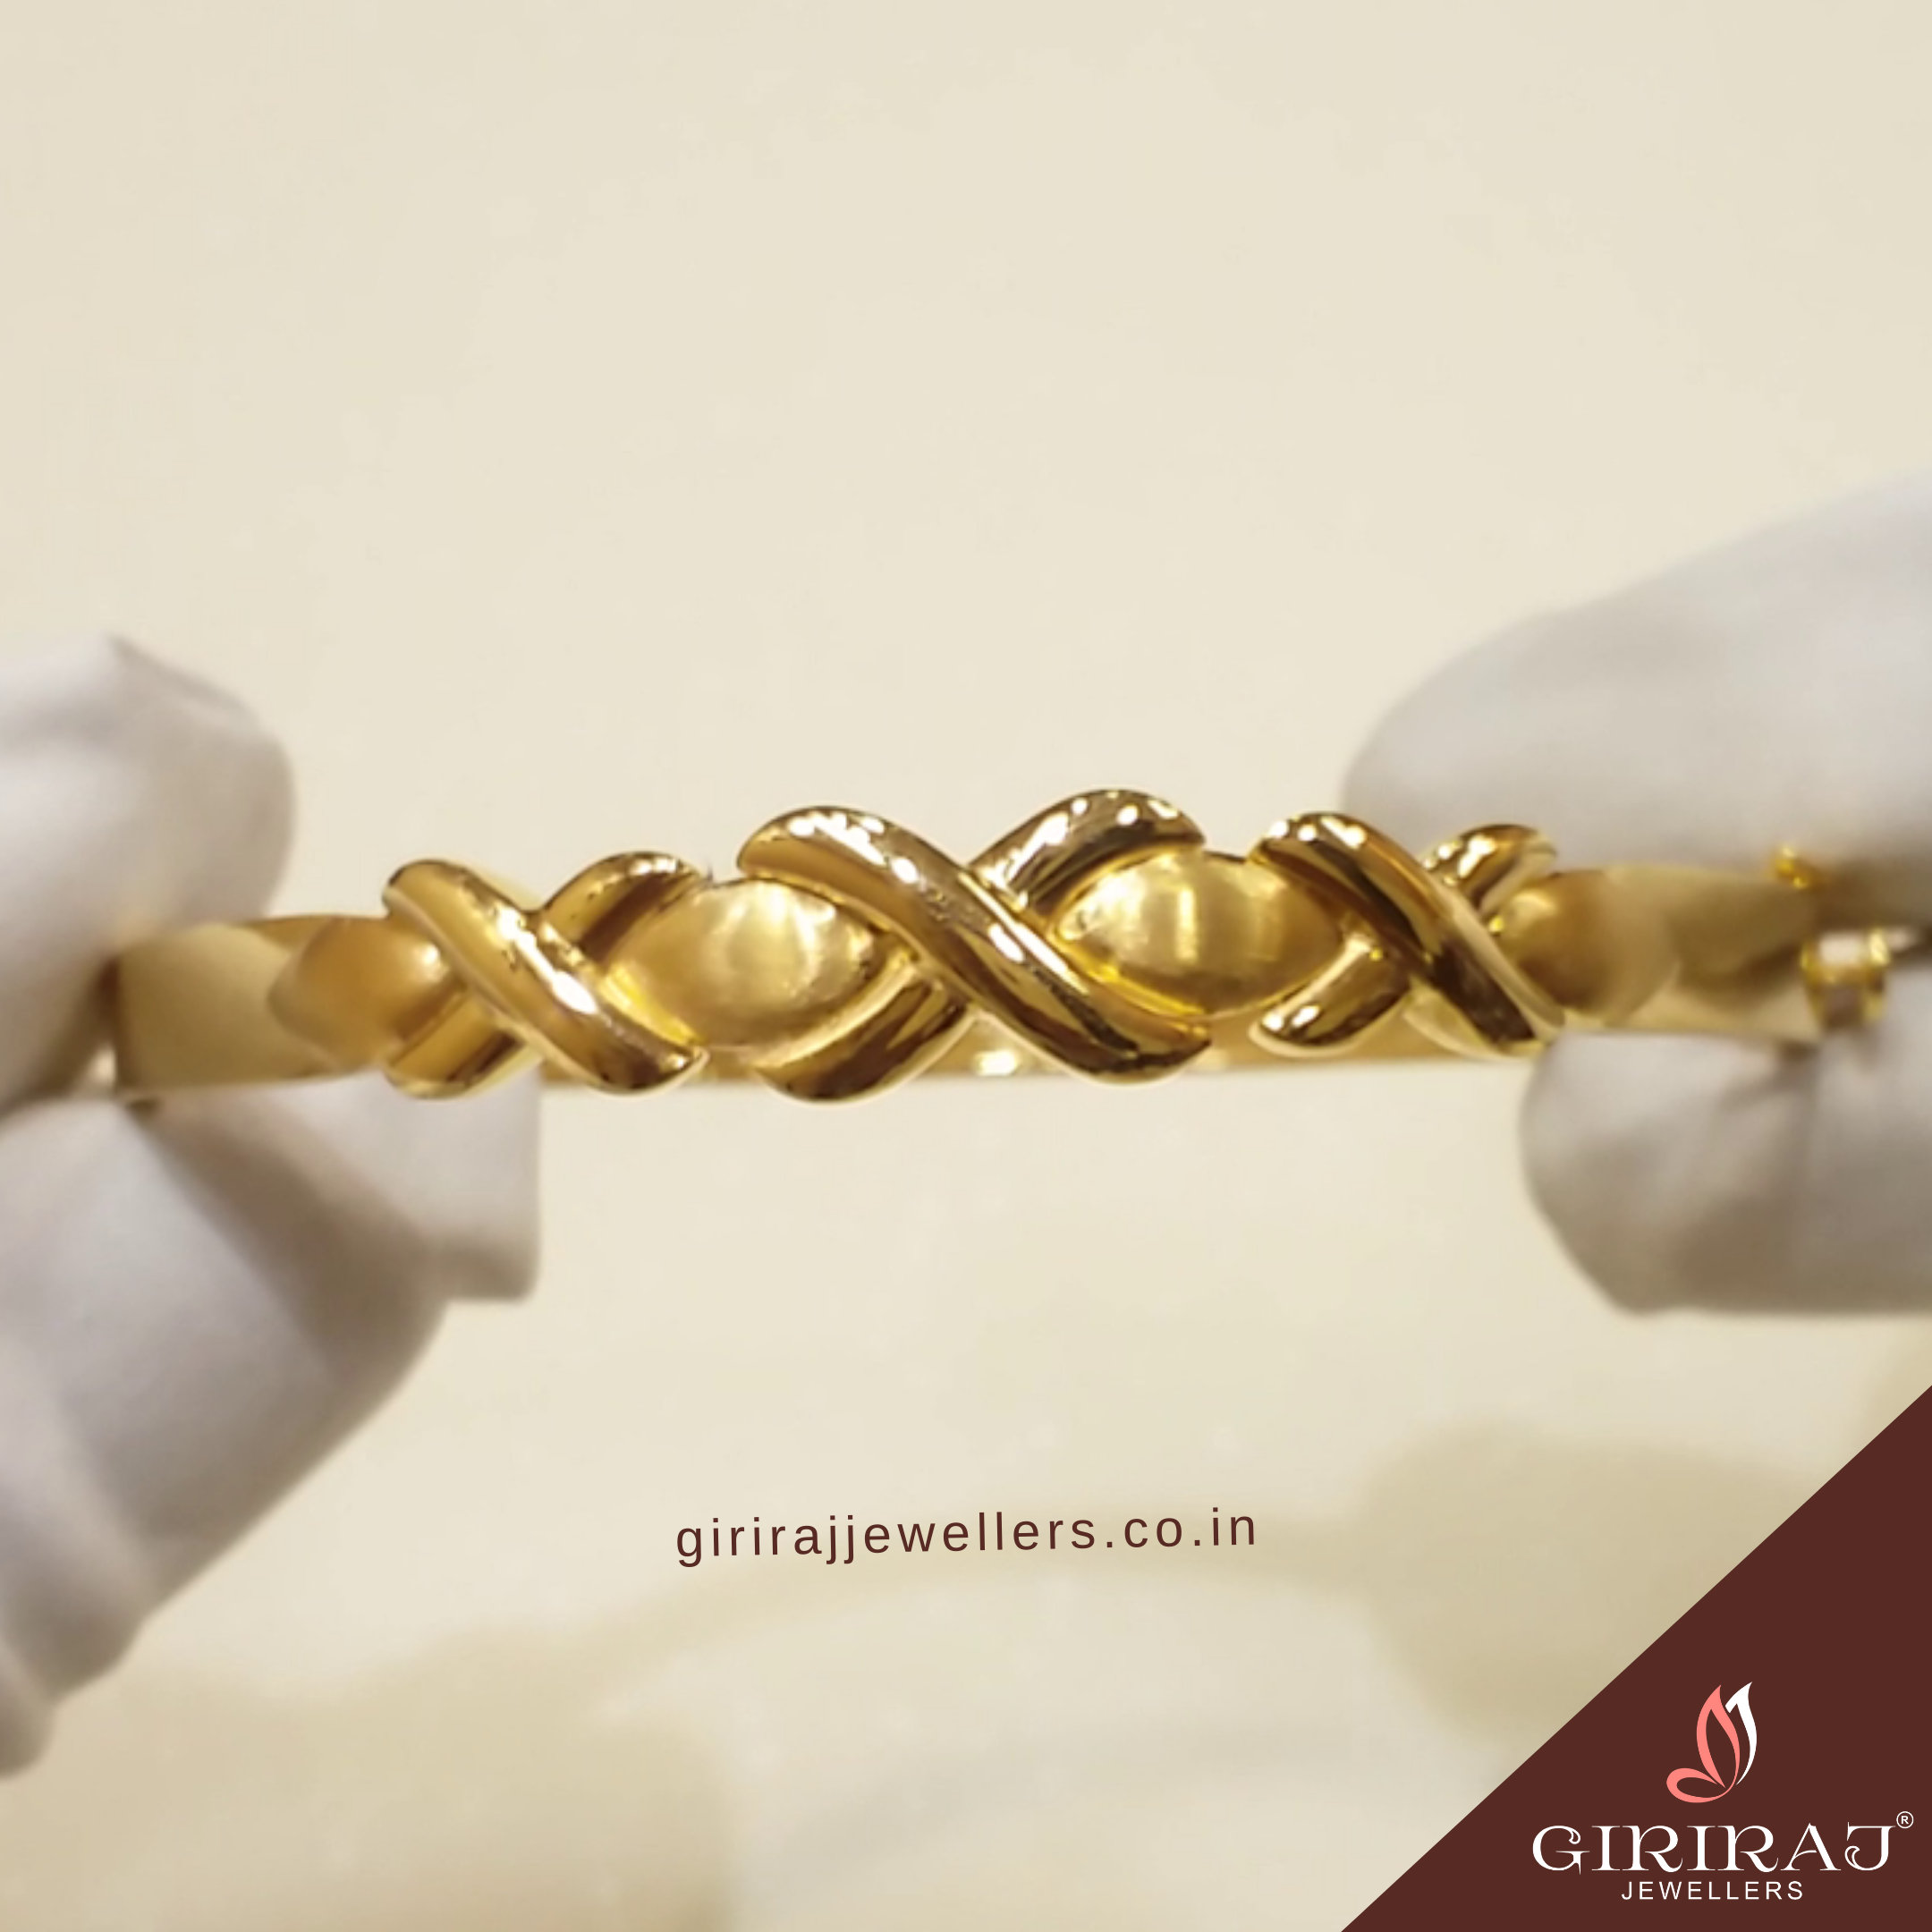 Cubic Zirconia Golden Silver Rose Gold Flower Design Bracelet Ring Combo -  RICH LOOK - 3104814